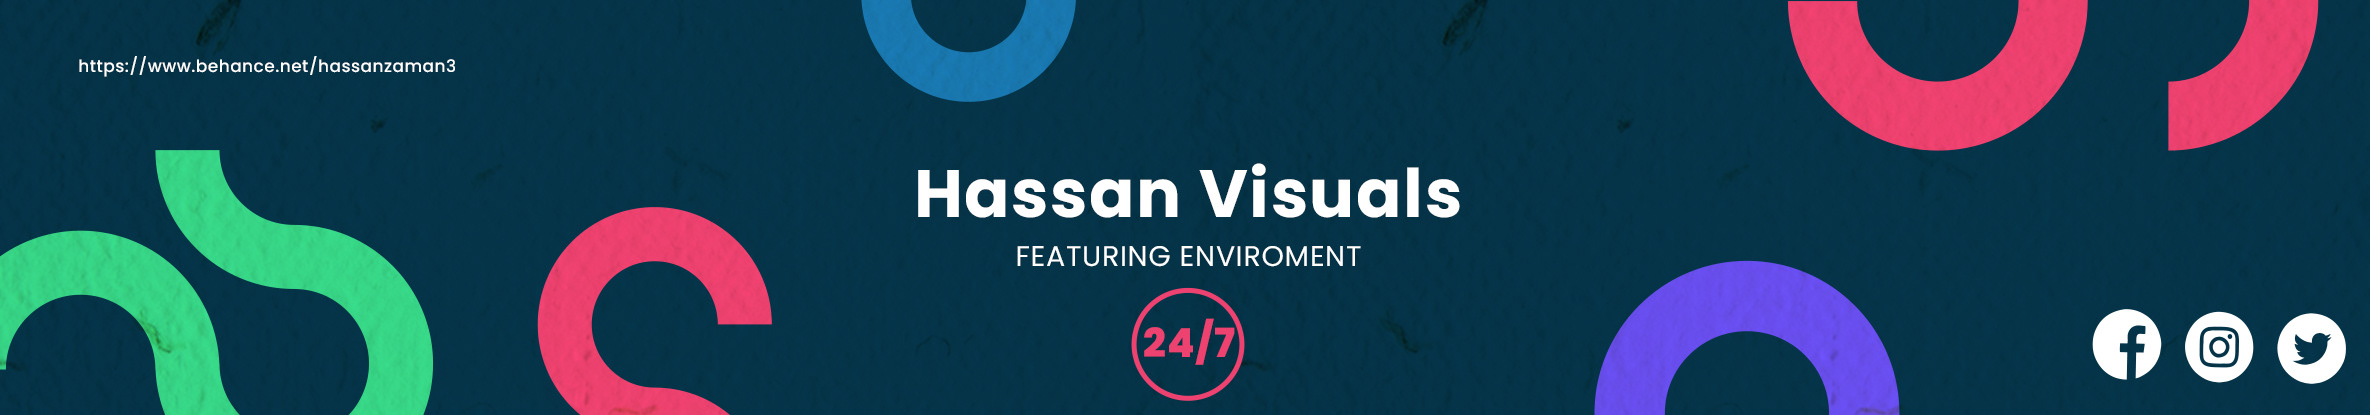 Hassan Visualss profilbanner